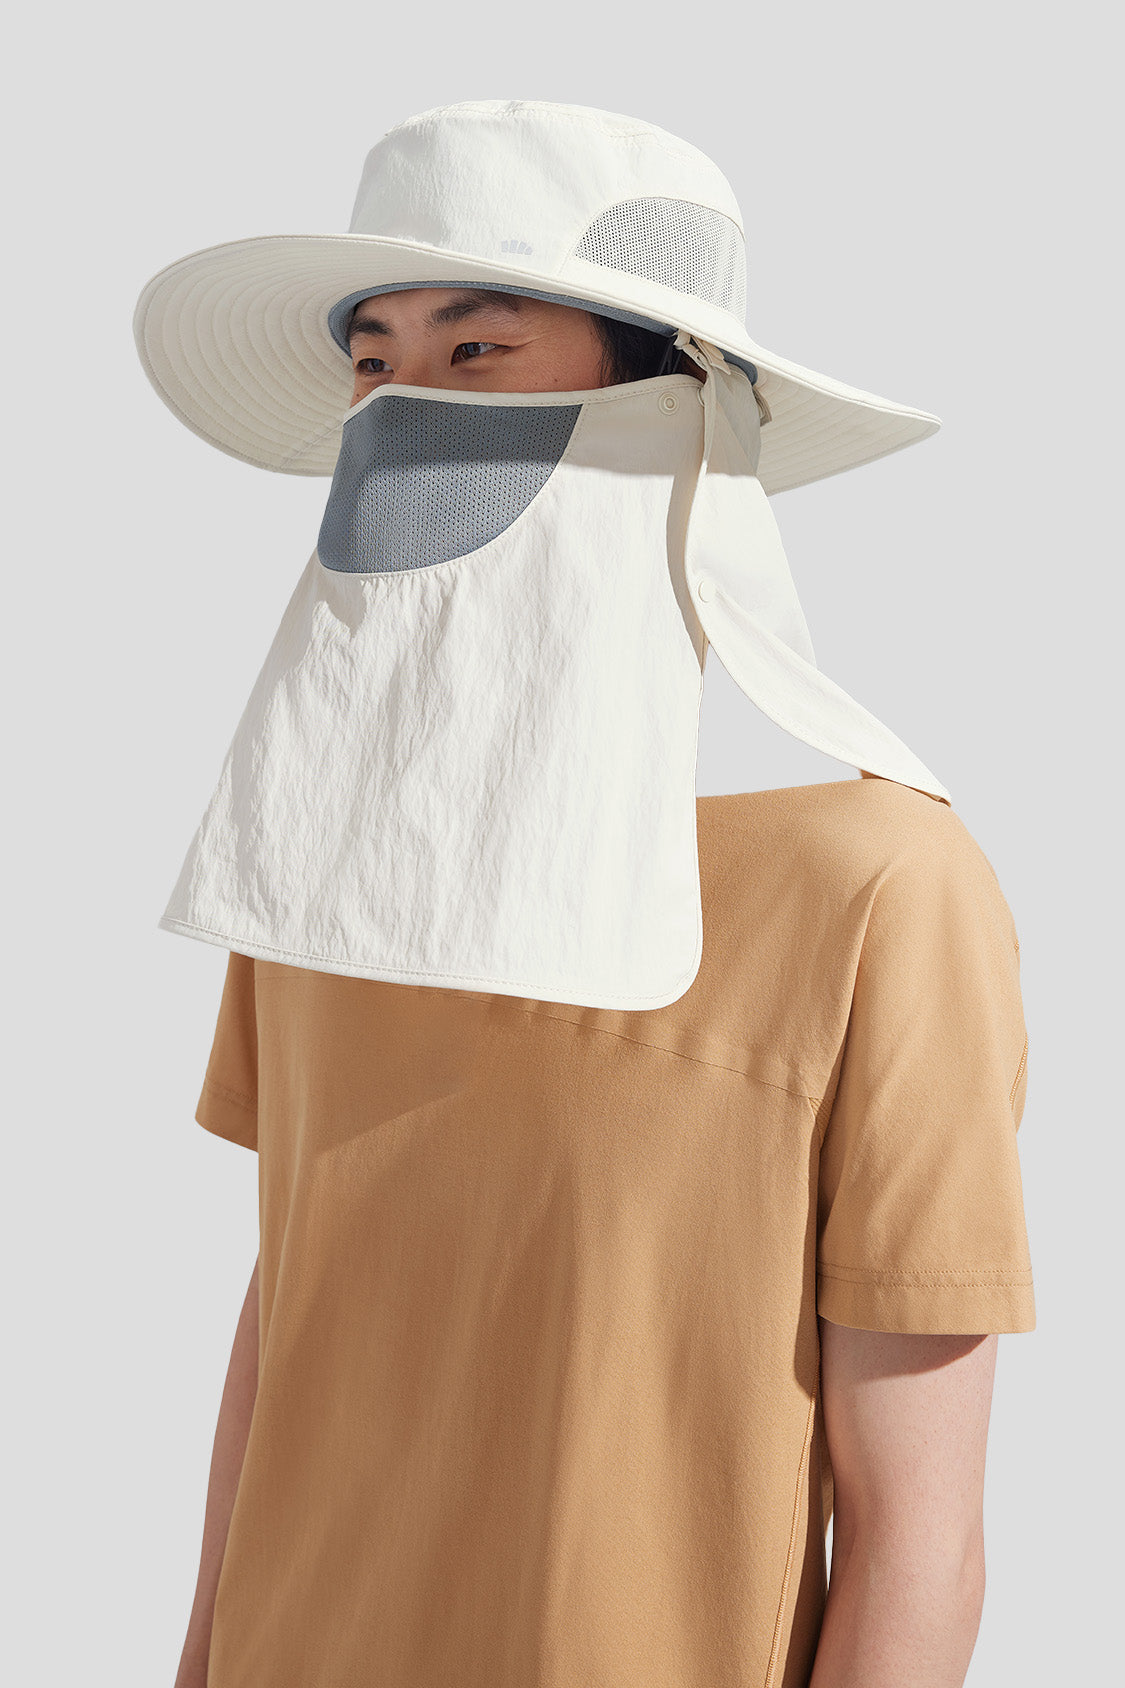 Cover - Men's Full Coverage Sun Protection Fishing Hat UPF50+